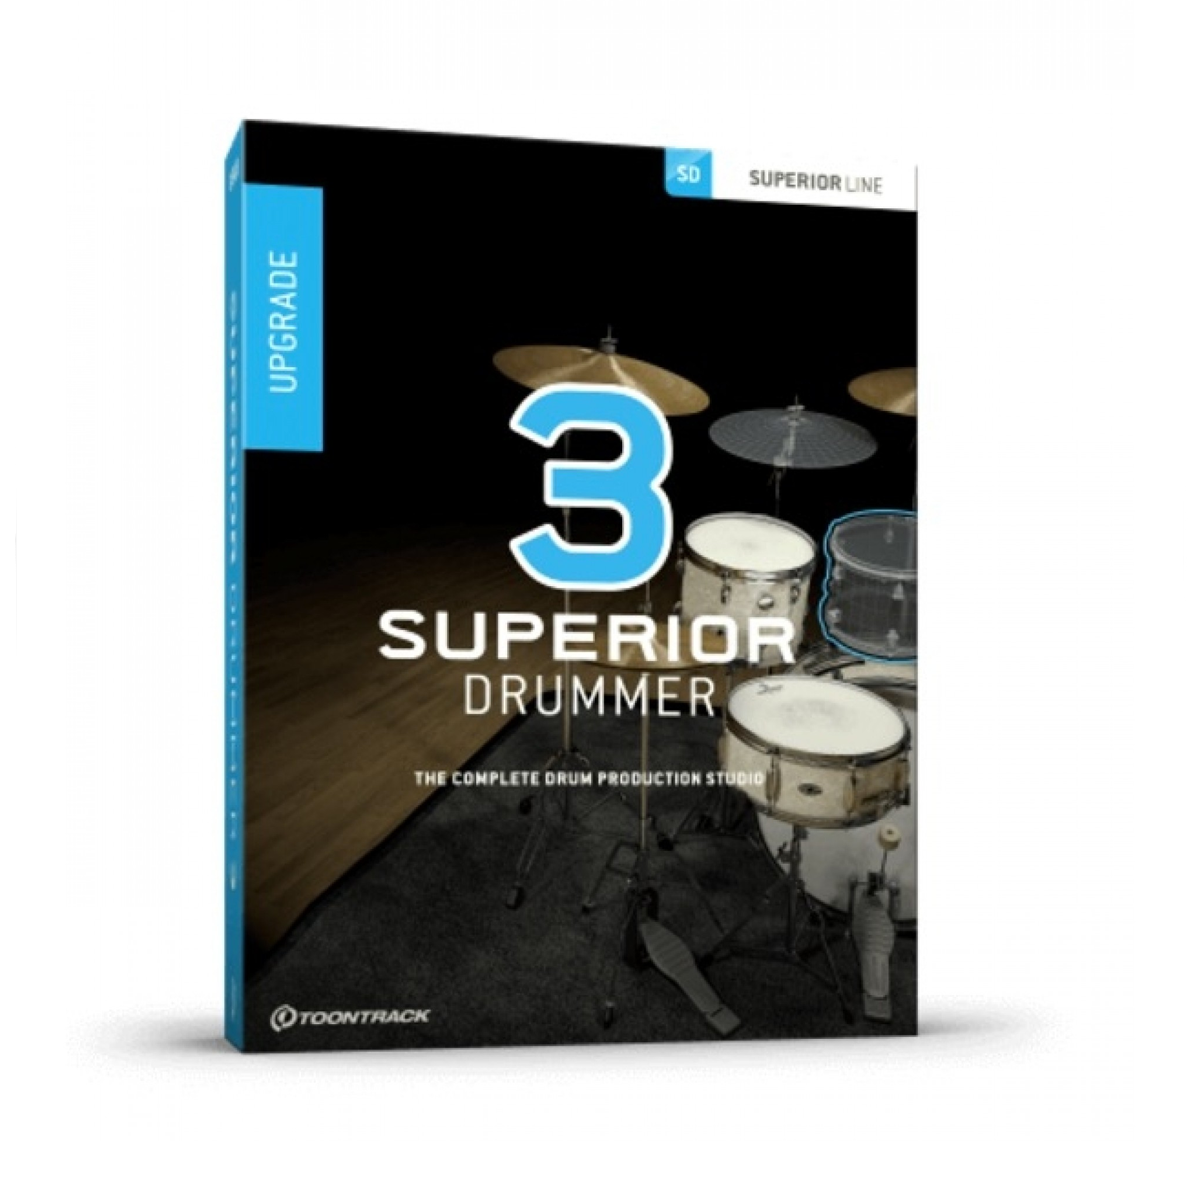 superior drummer 3 download free full